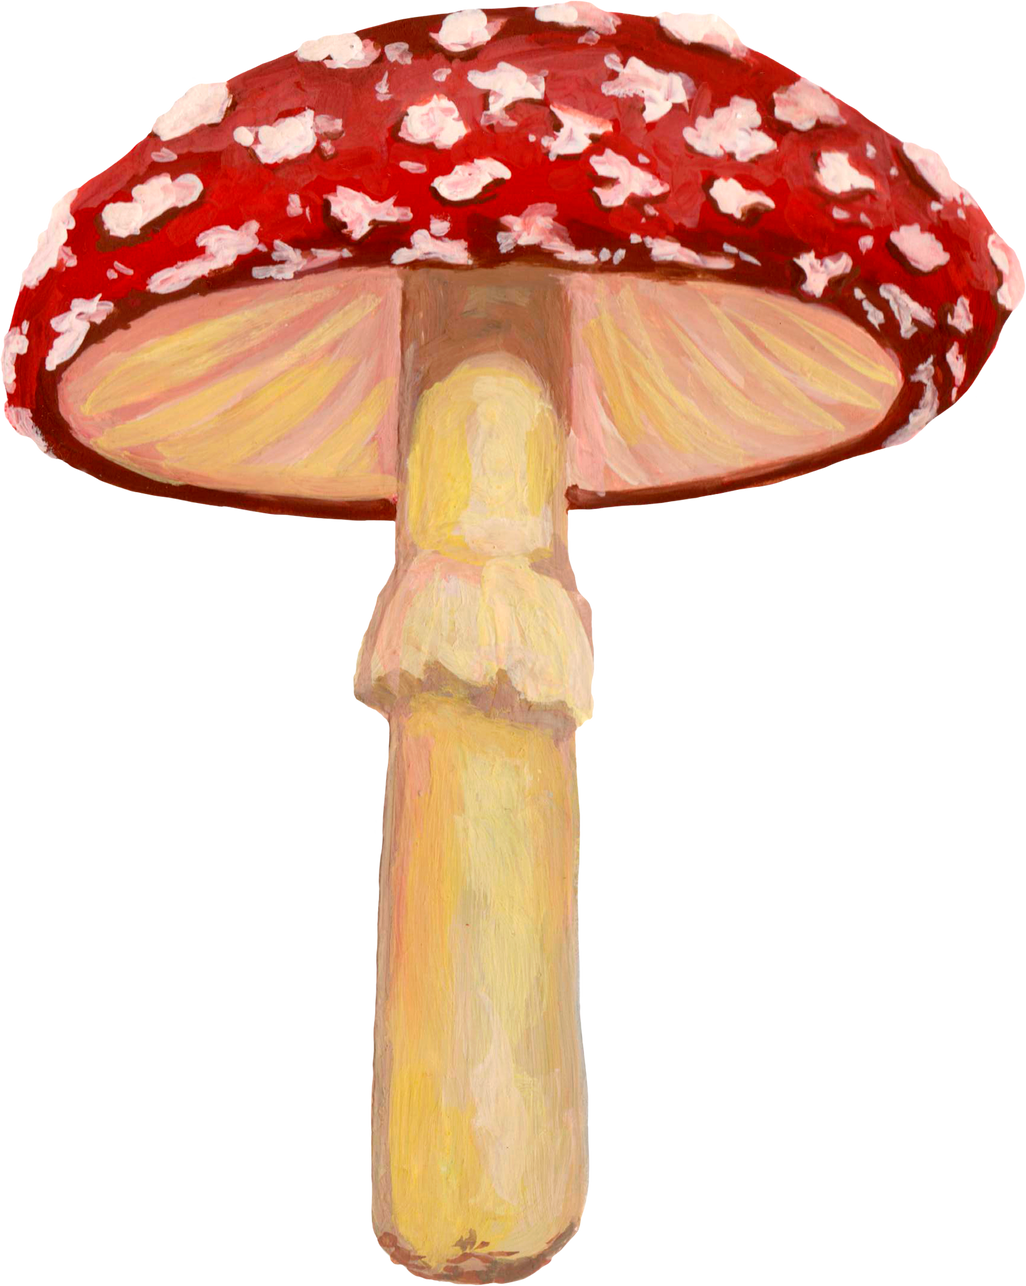 Watercolor Fly Agaric Mushroom Illustration